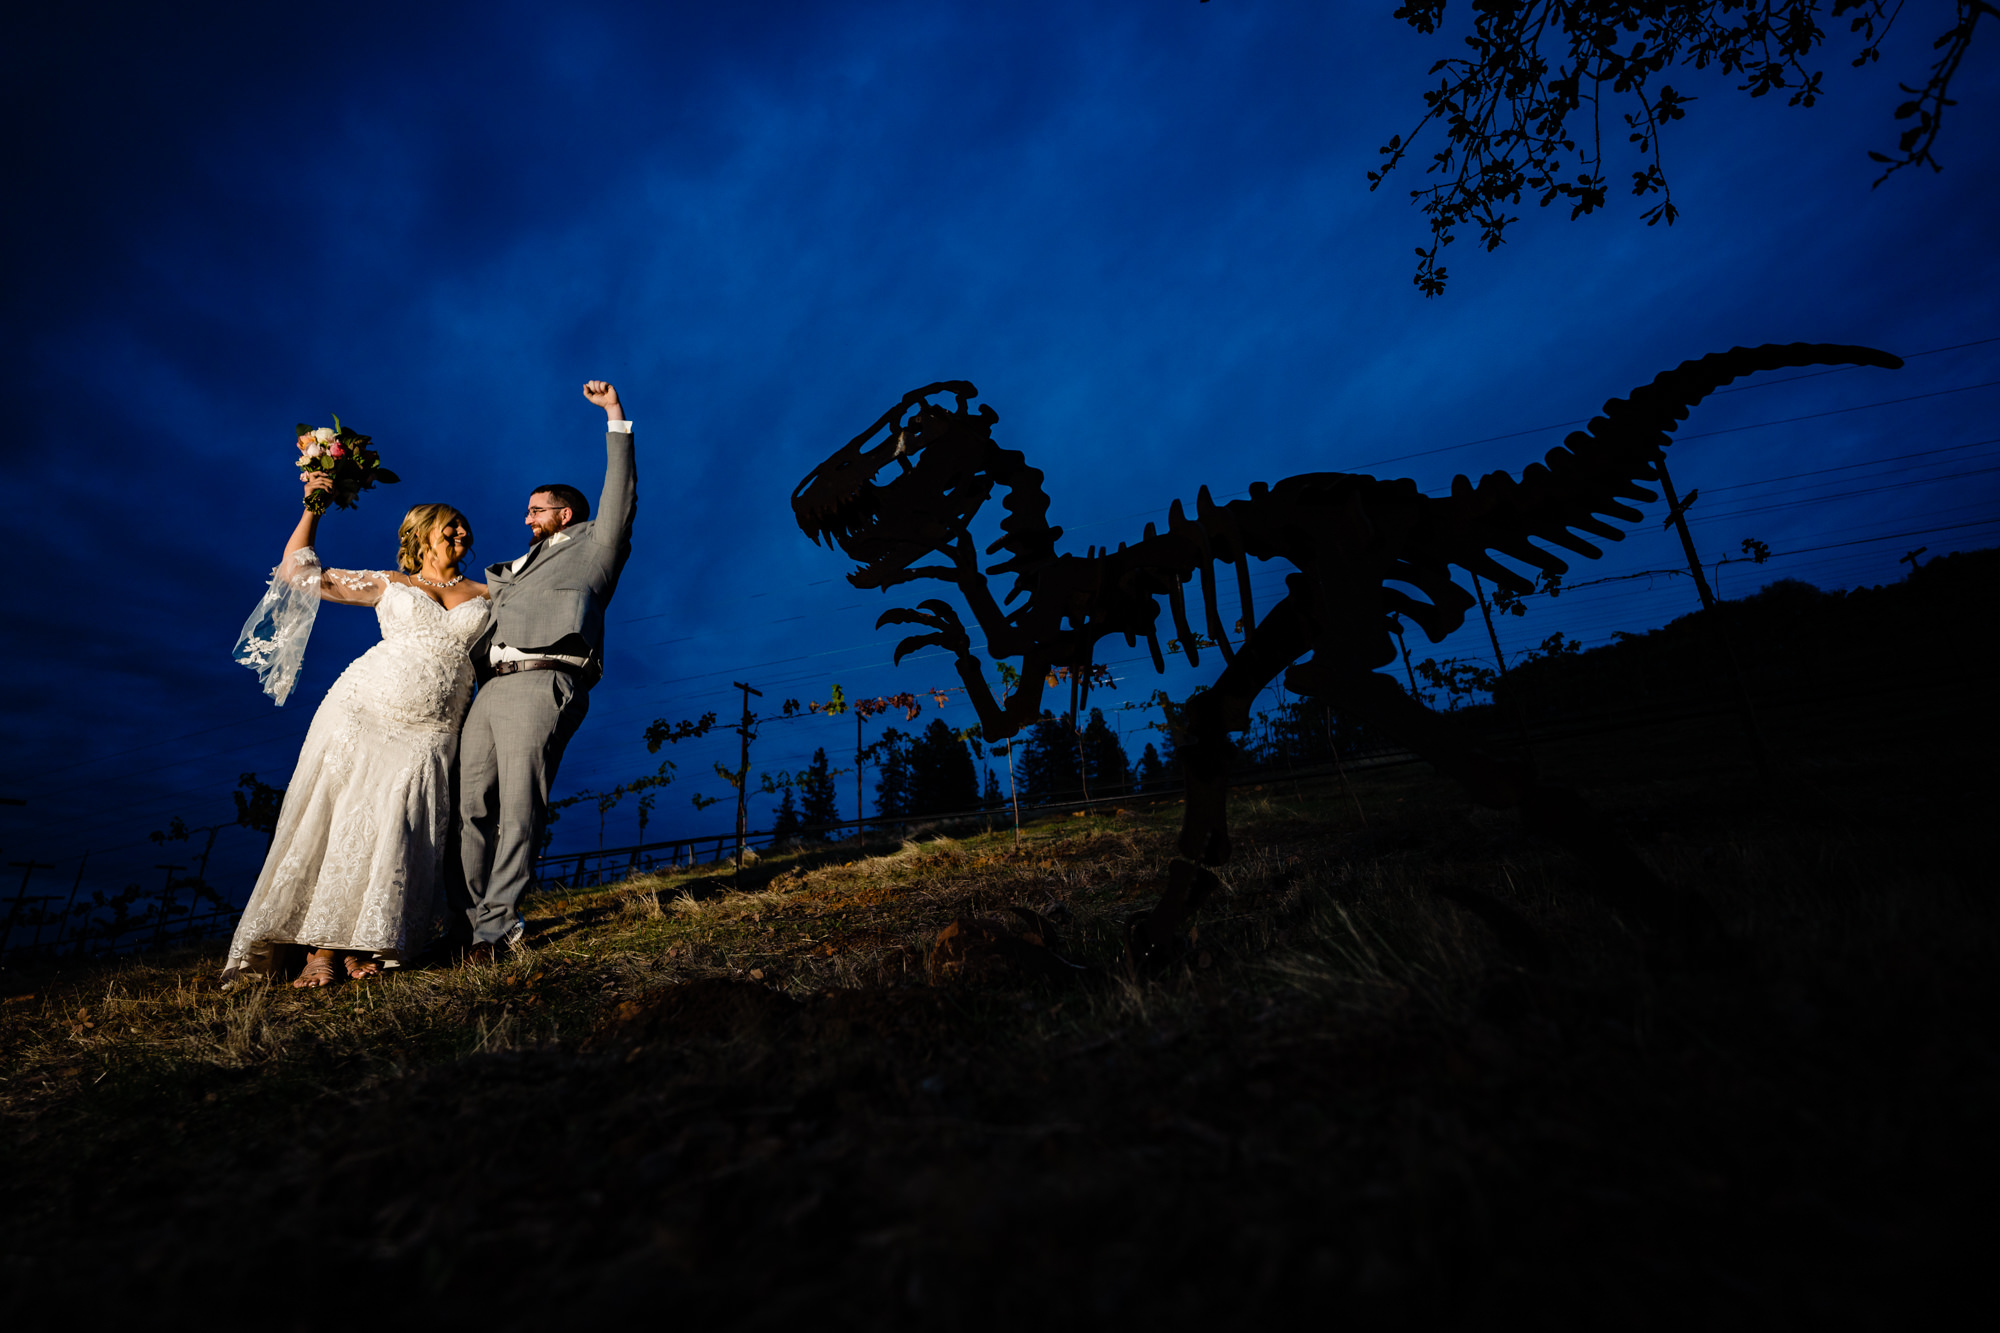 Wedding photo with dinosaur skeleton at night.